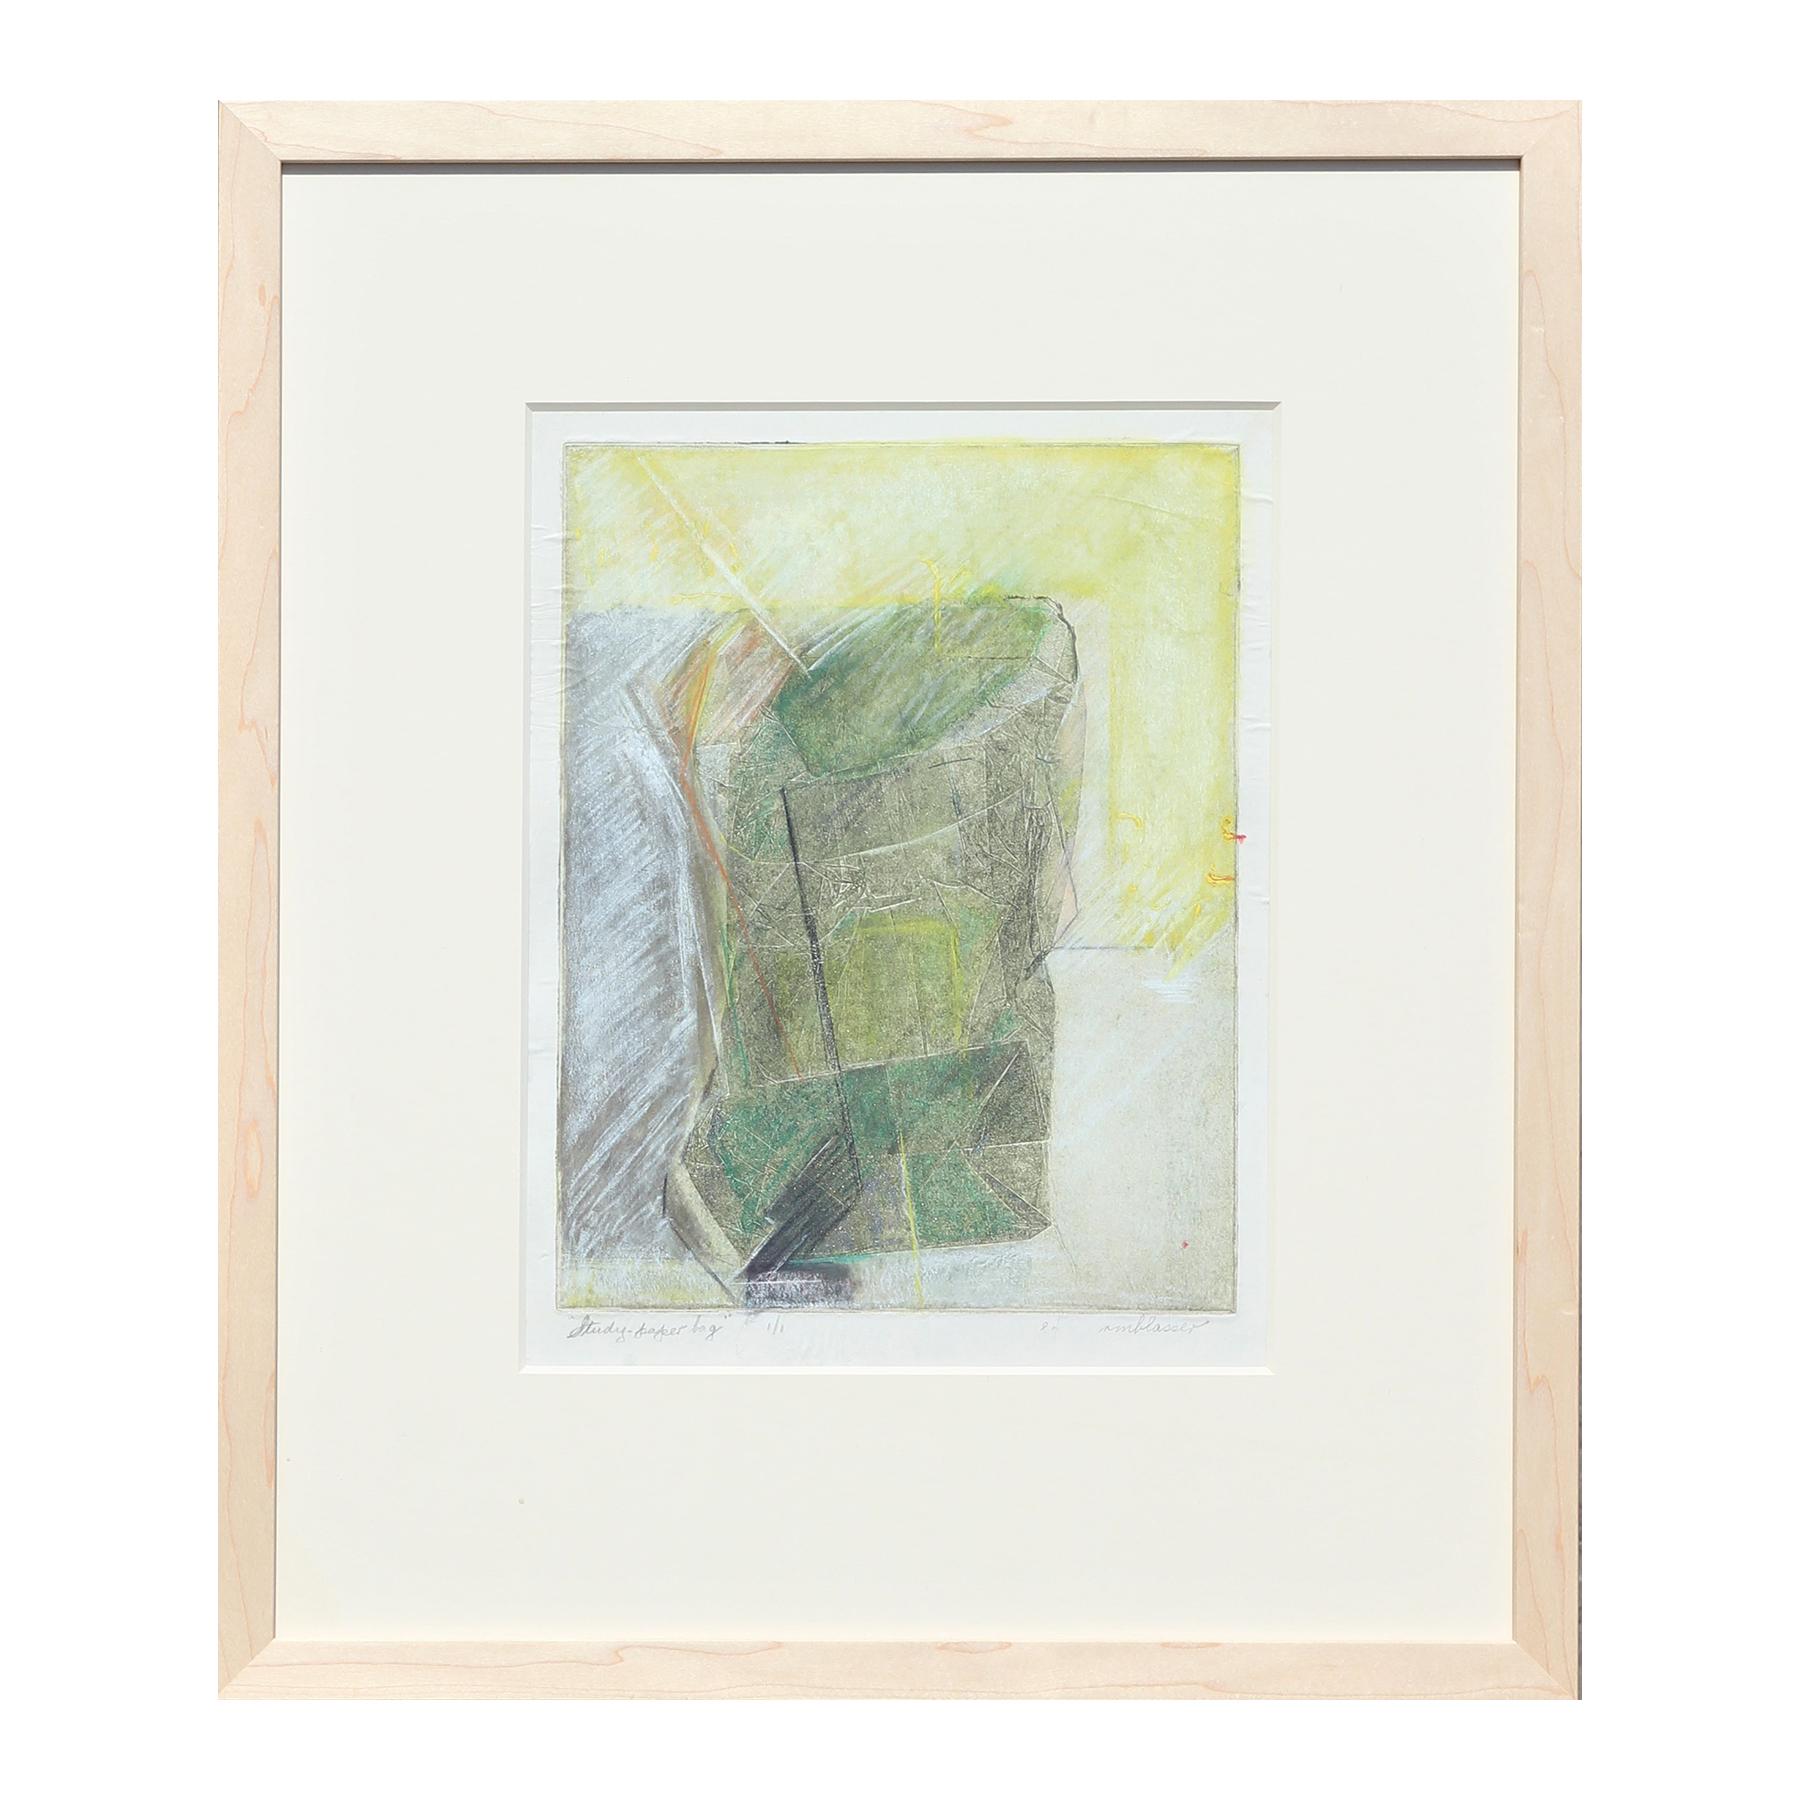 Rita Blasser Abstract Print - "Study - Paper Bag" Abstract Green and Neutral Toned Print